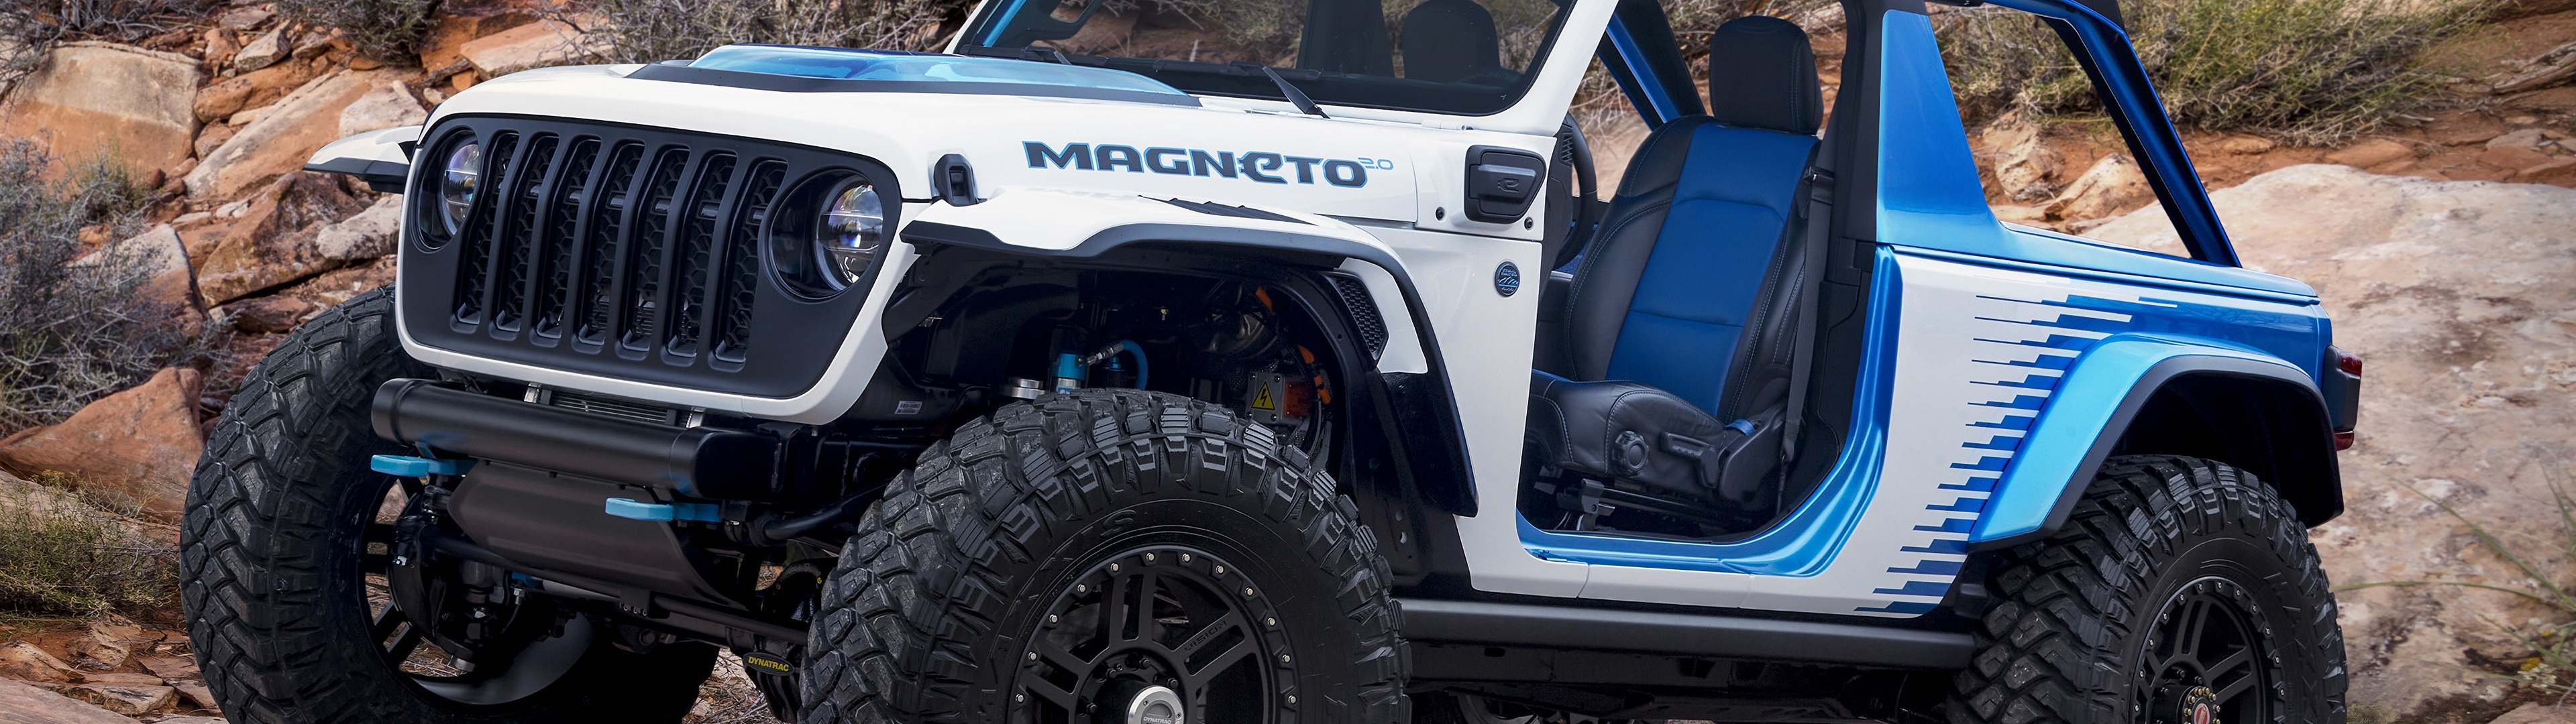 Jeep Magneto, Wrangler 4K wallpaper, Electric SUV, 3840x1080 Dual Screen Desktop